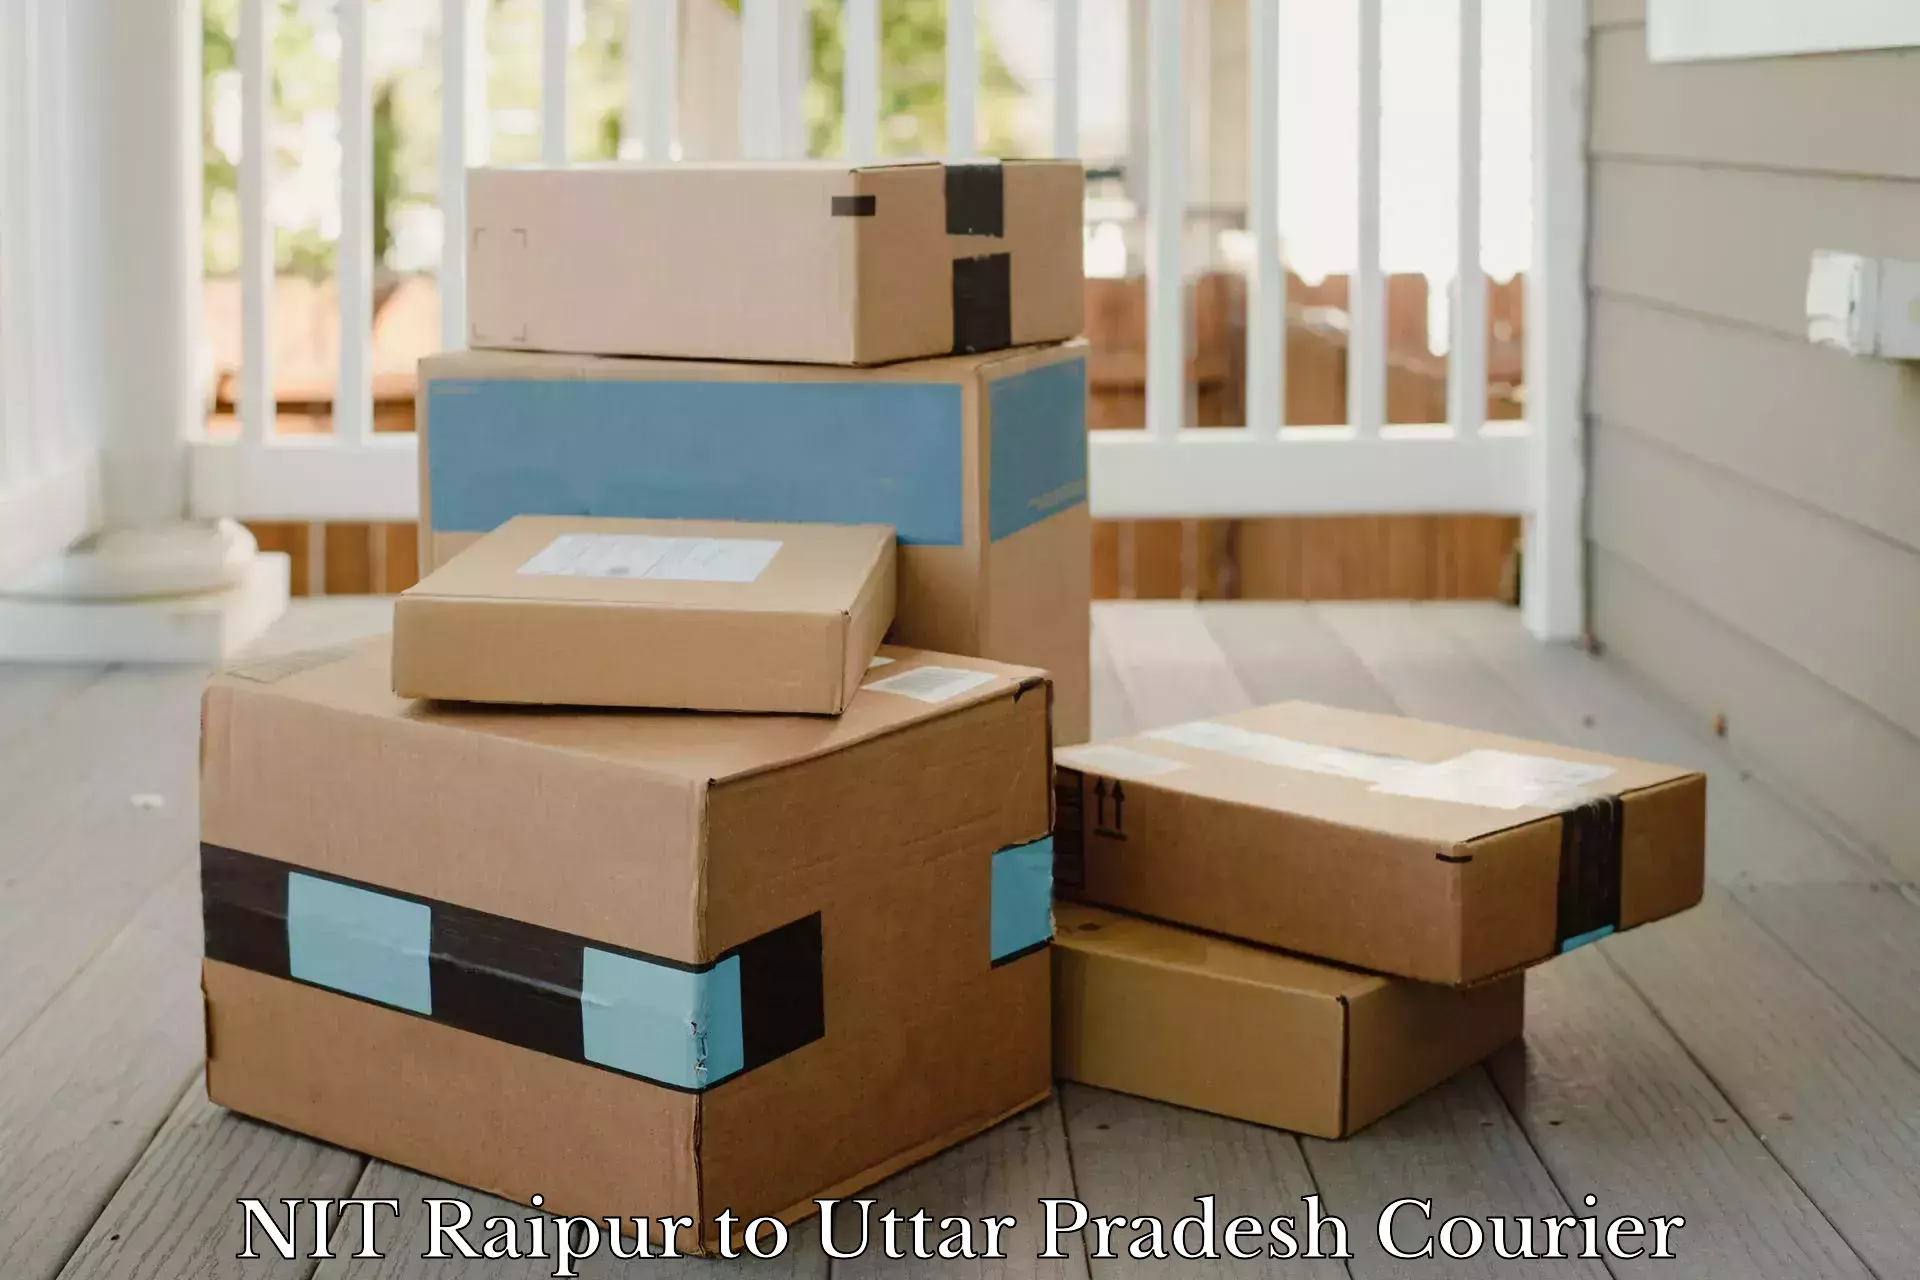 Advanced parcel tracking in NIT Raipur to Gorakhpur